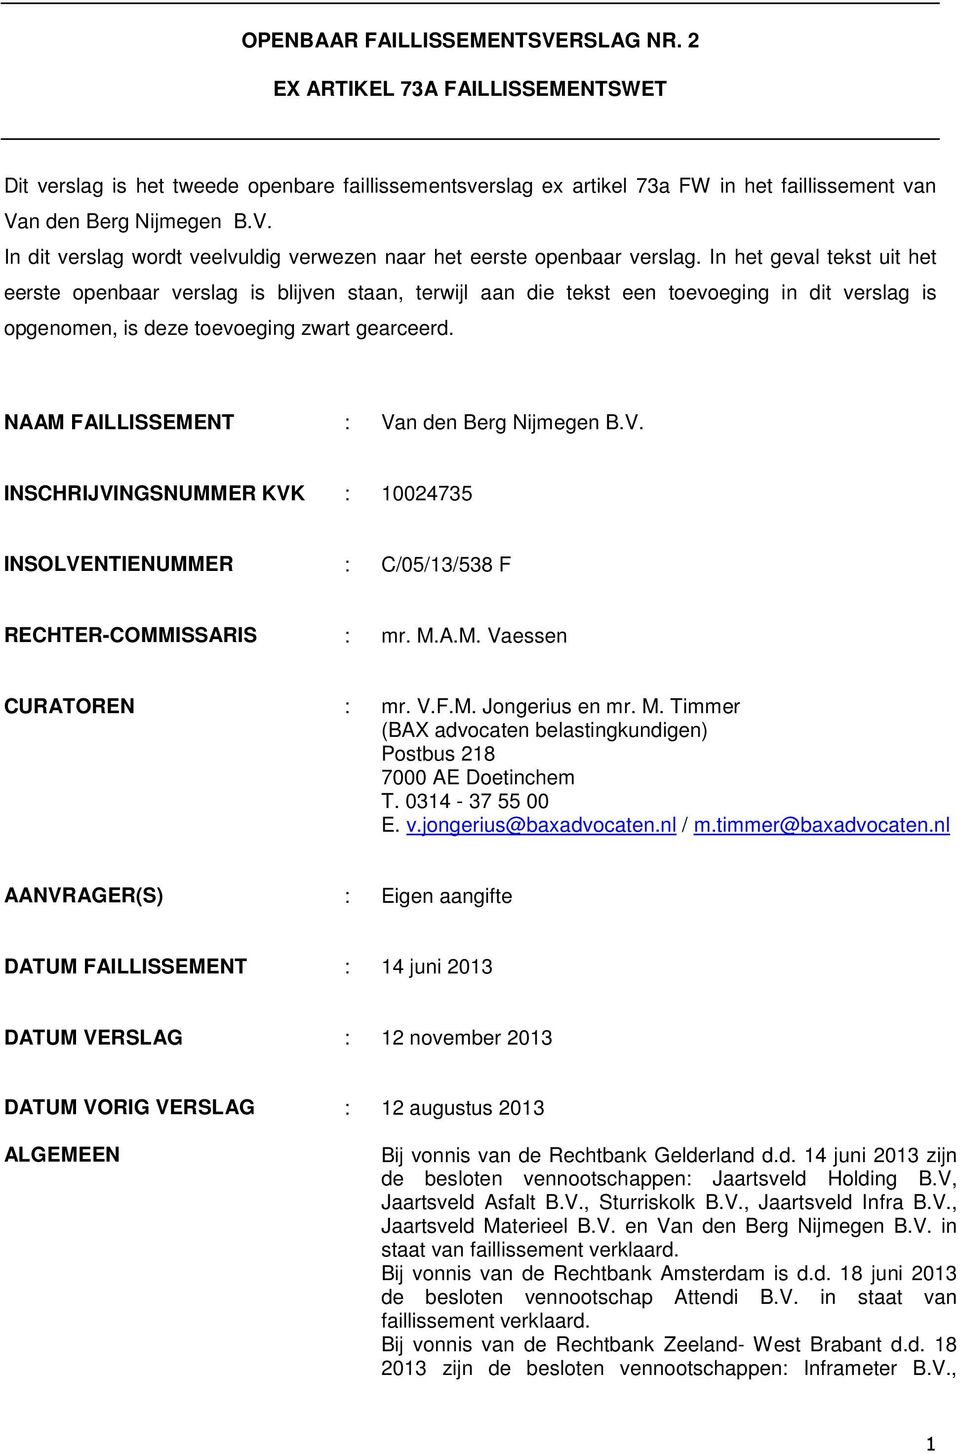 NAAM FAILLISSEMENT : Van den Berg Nijmegen B.V. INSCHRIJVINGSNUMMER KVK : 10024735 INSOLVENTIENUMMER : C/05/13/538 F RECHTER-COMMISSARIS : mr. M.